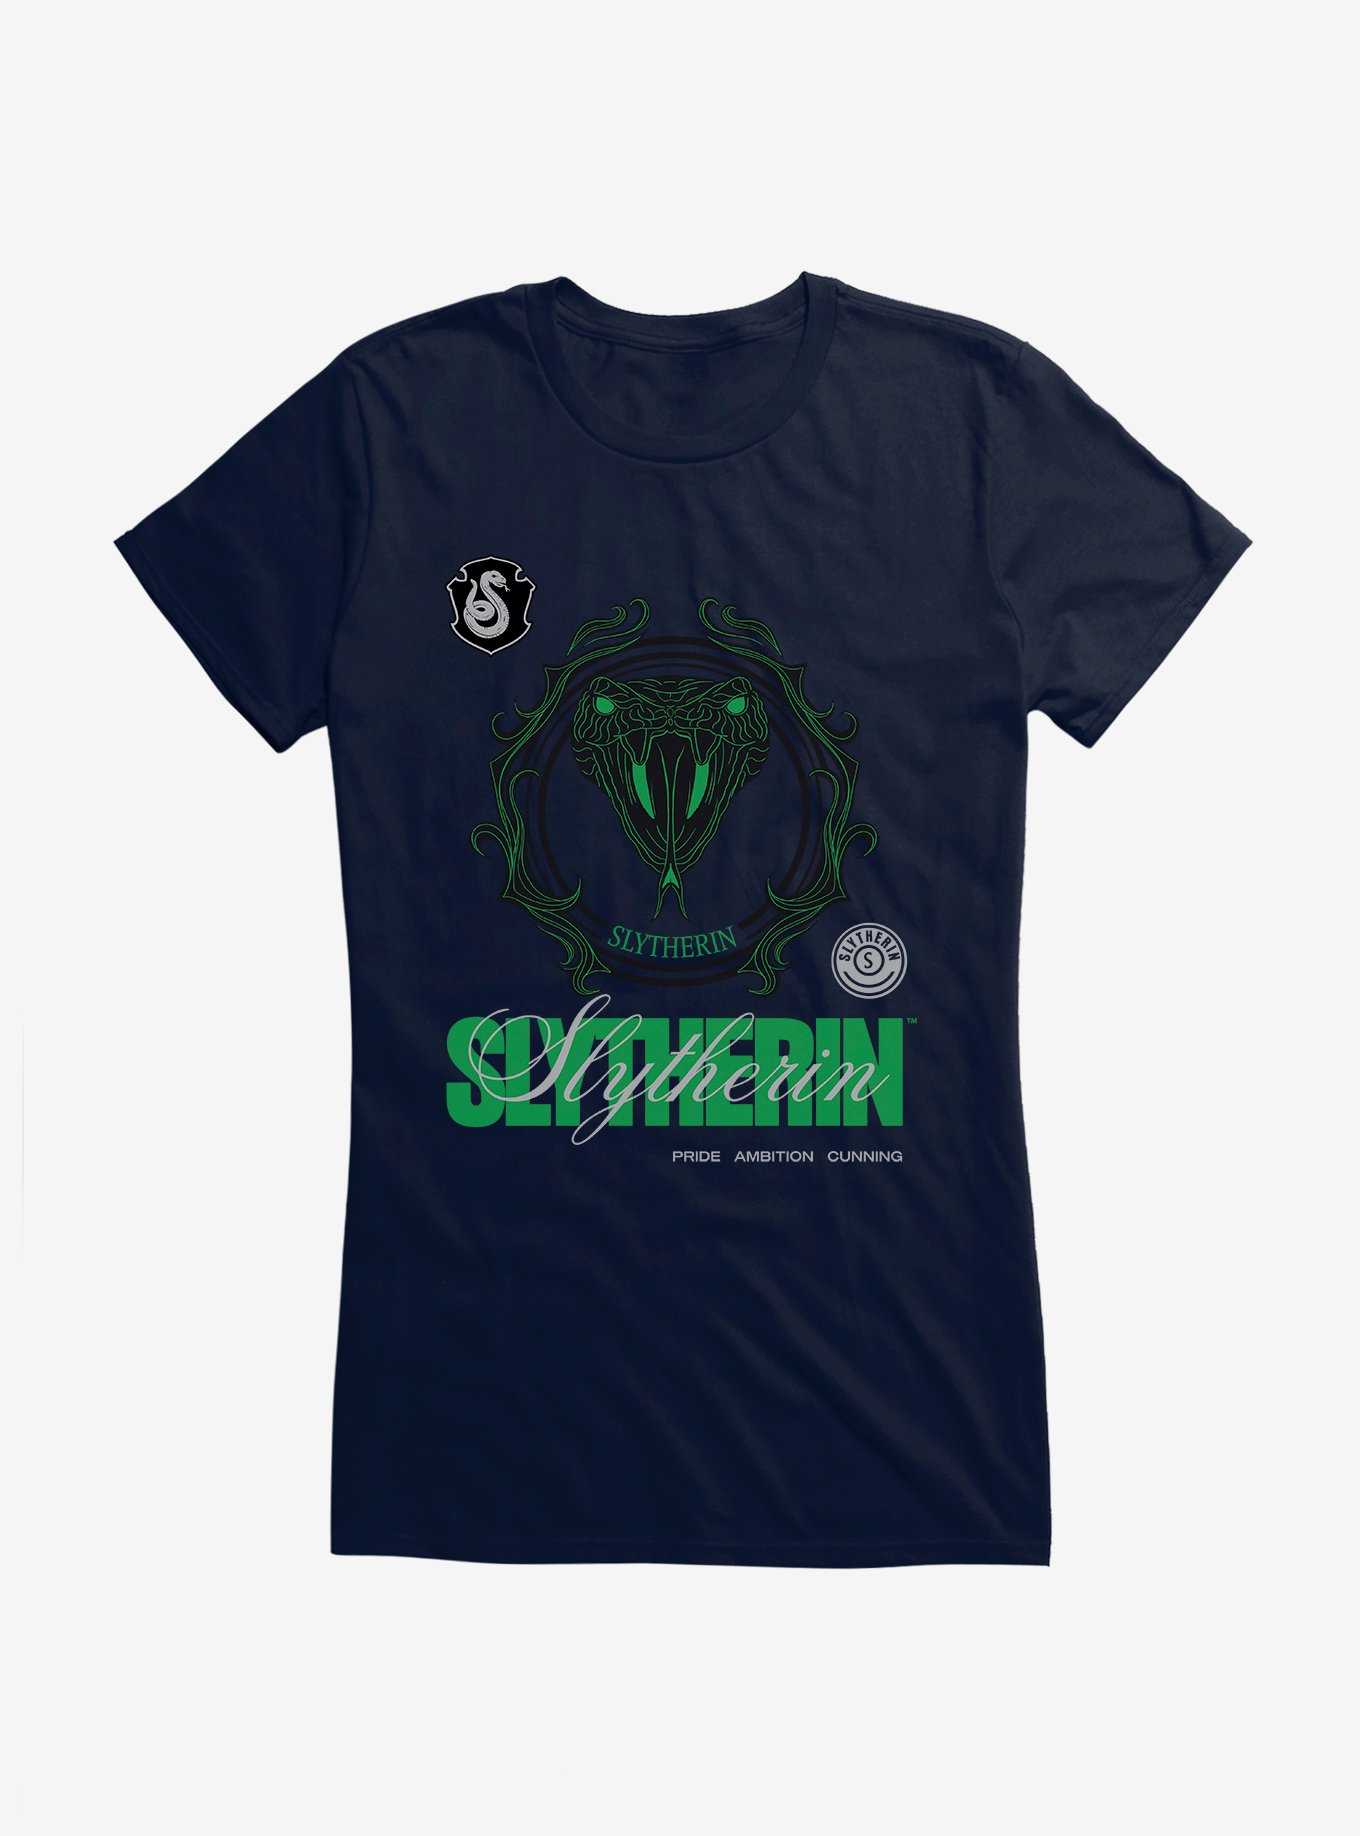 Harry Potter Slytherin Seal Motto Girls T-Shirt, , hi-res